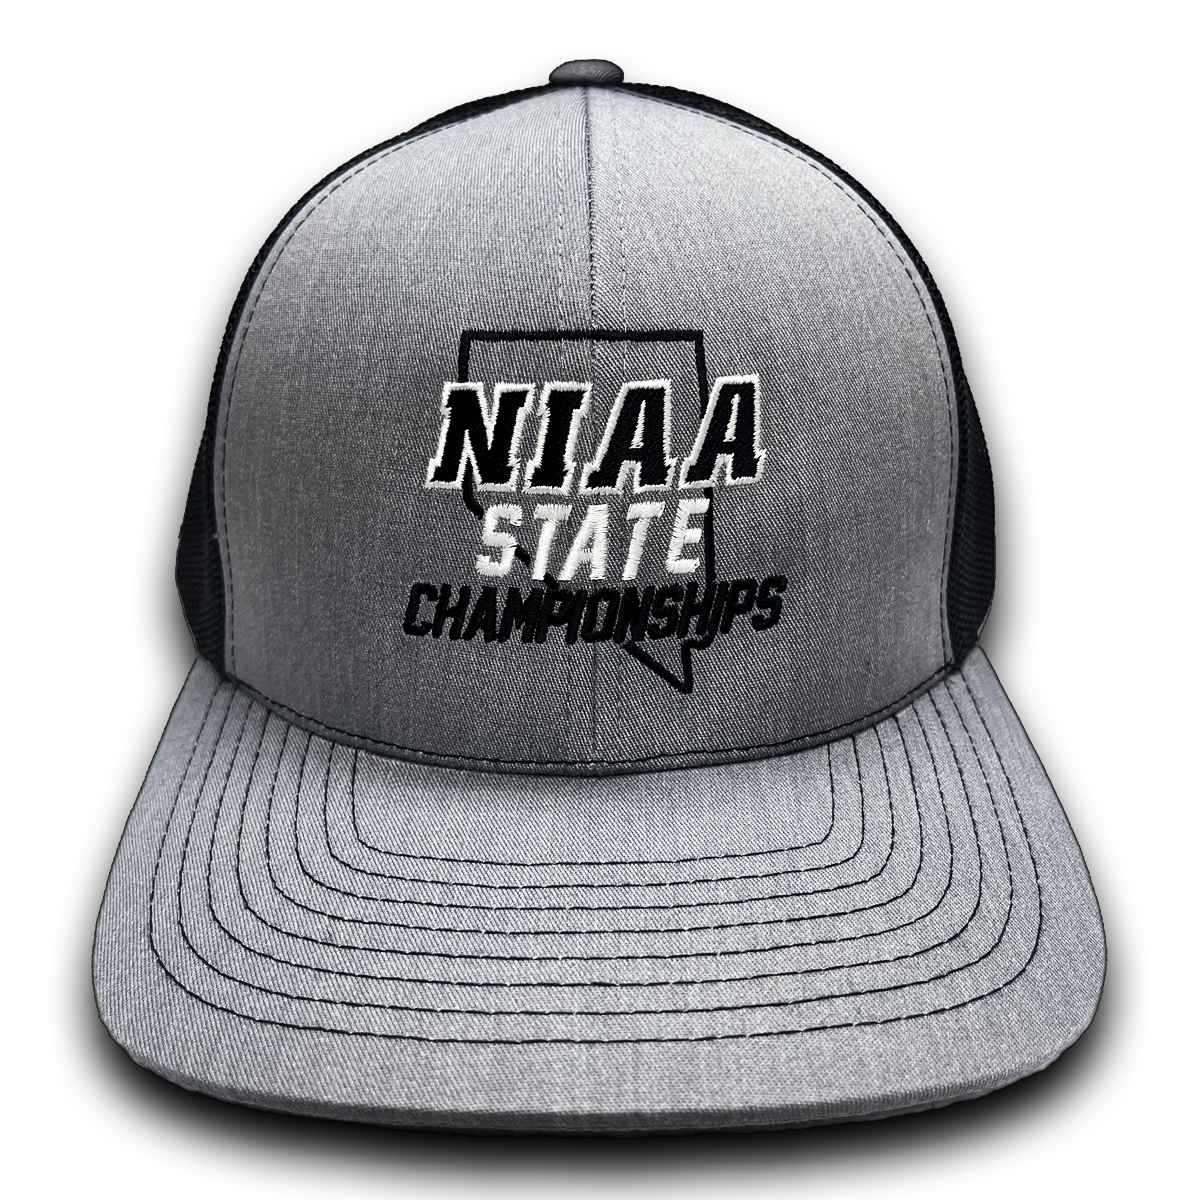 NIAA State Championship Charcoal Gray & Black Cap